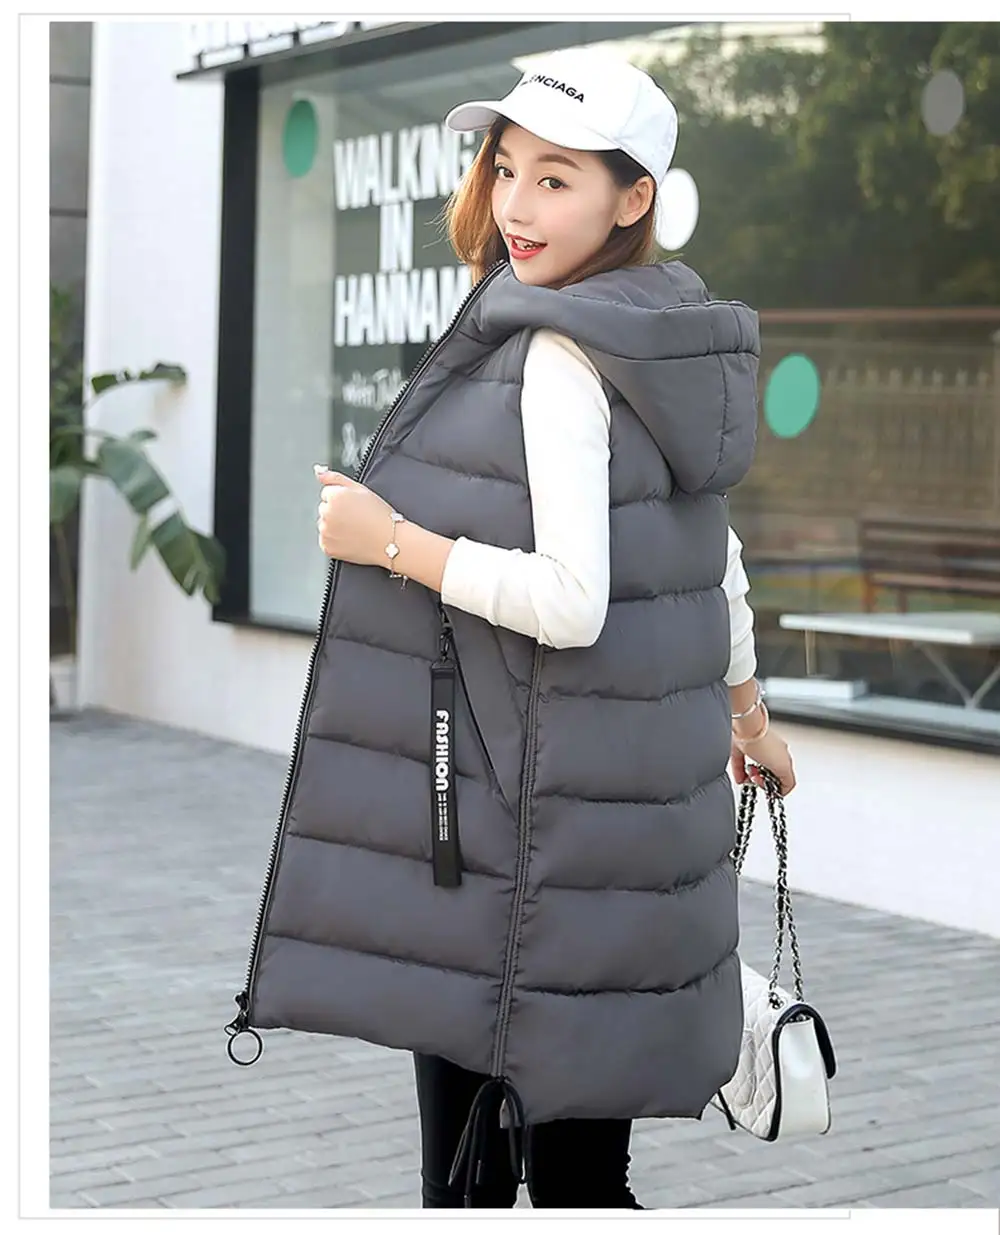 Br 2021 New Brand Winter Women's jacket Windproof Warm Long Cotton Waistcoat Casual Sleeveless hooded femme coat vest | Женская